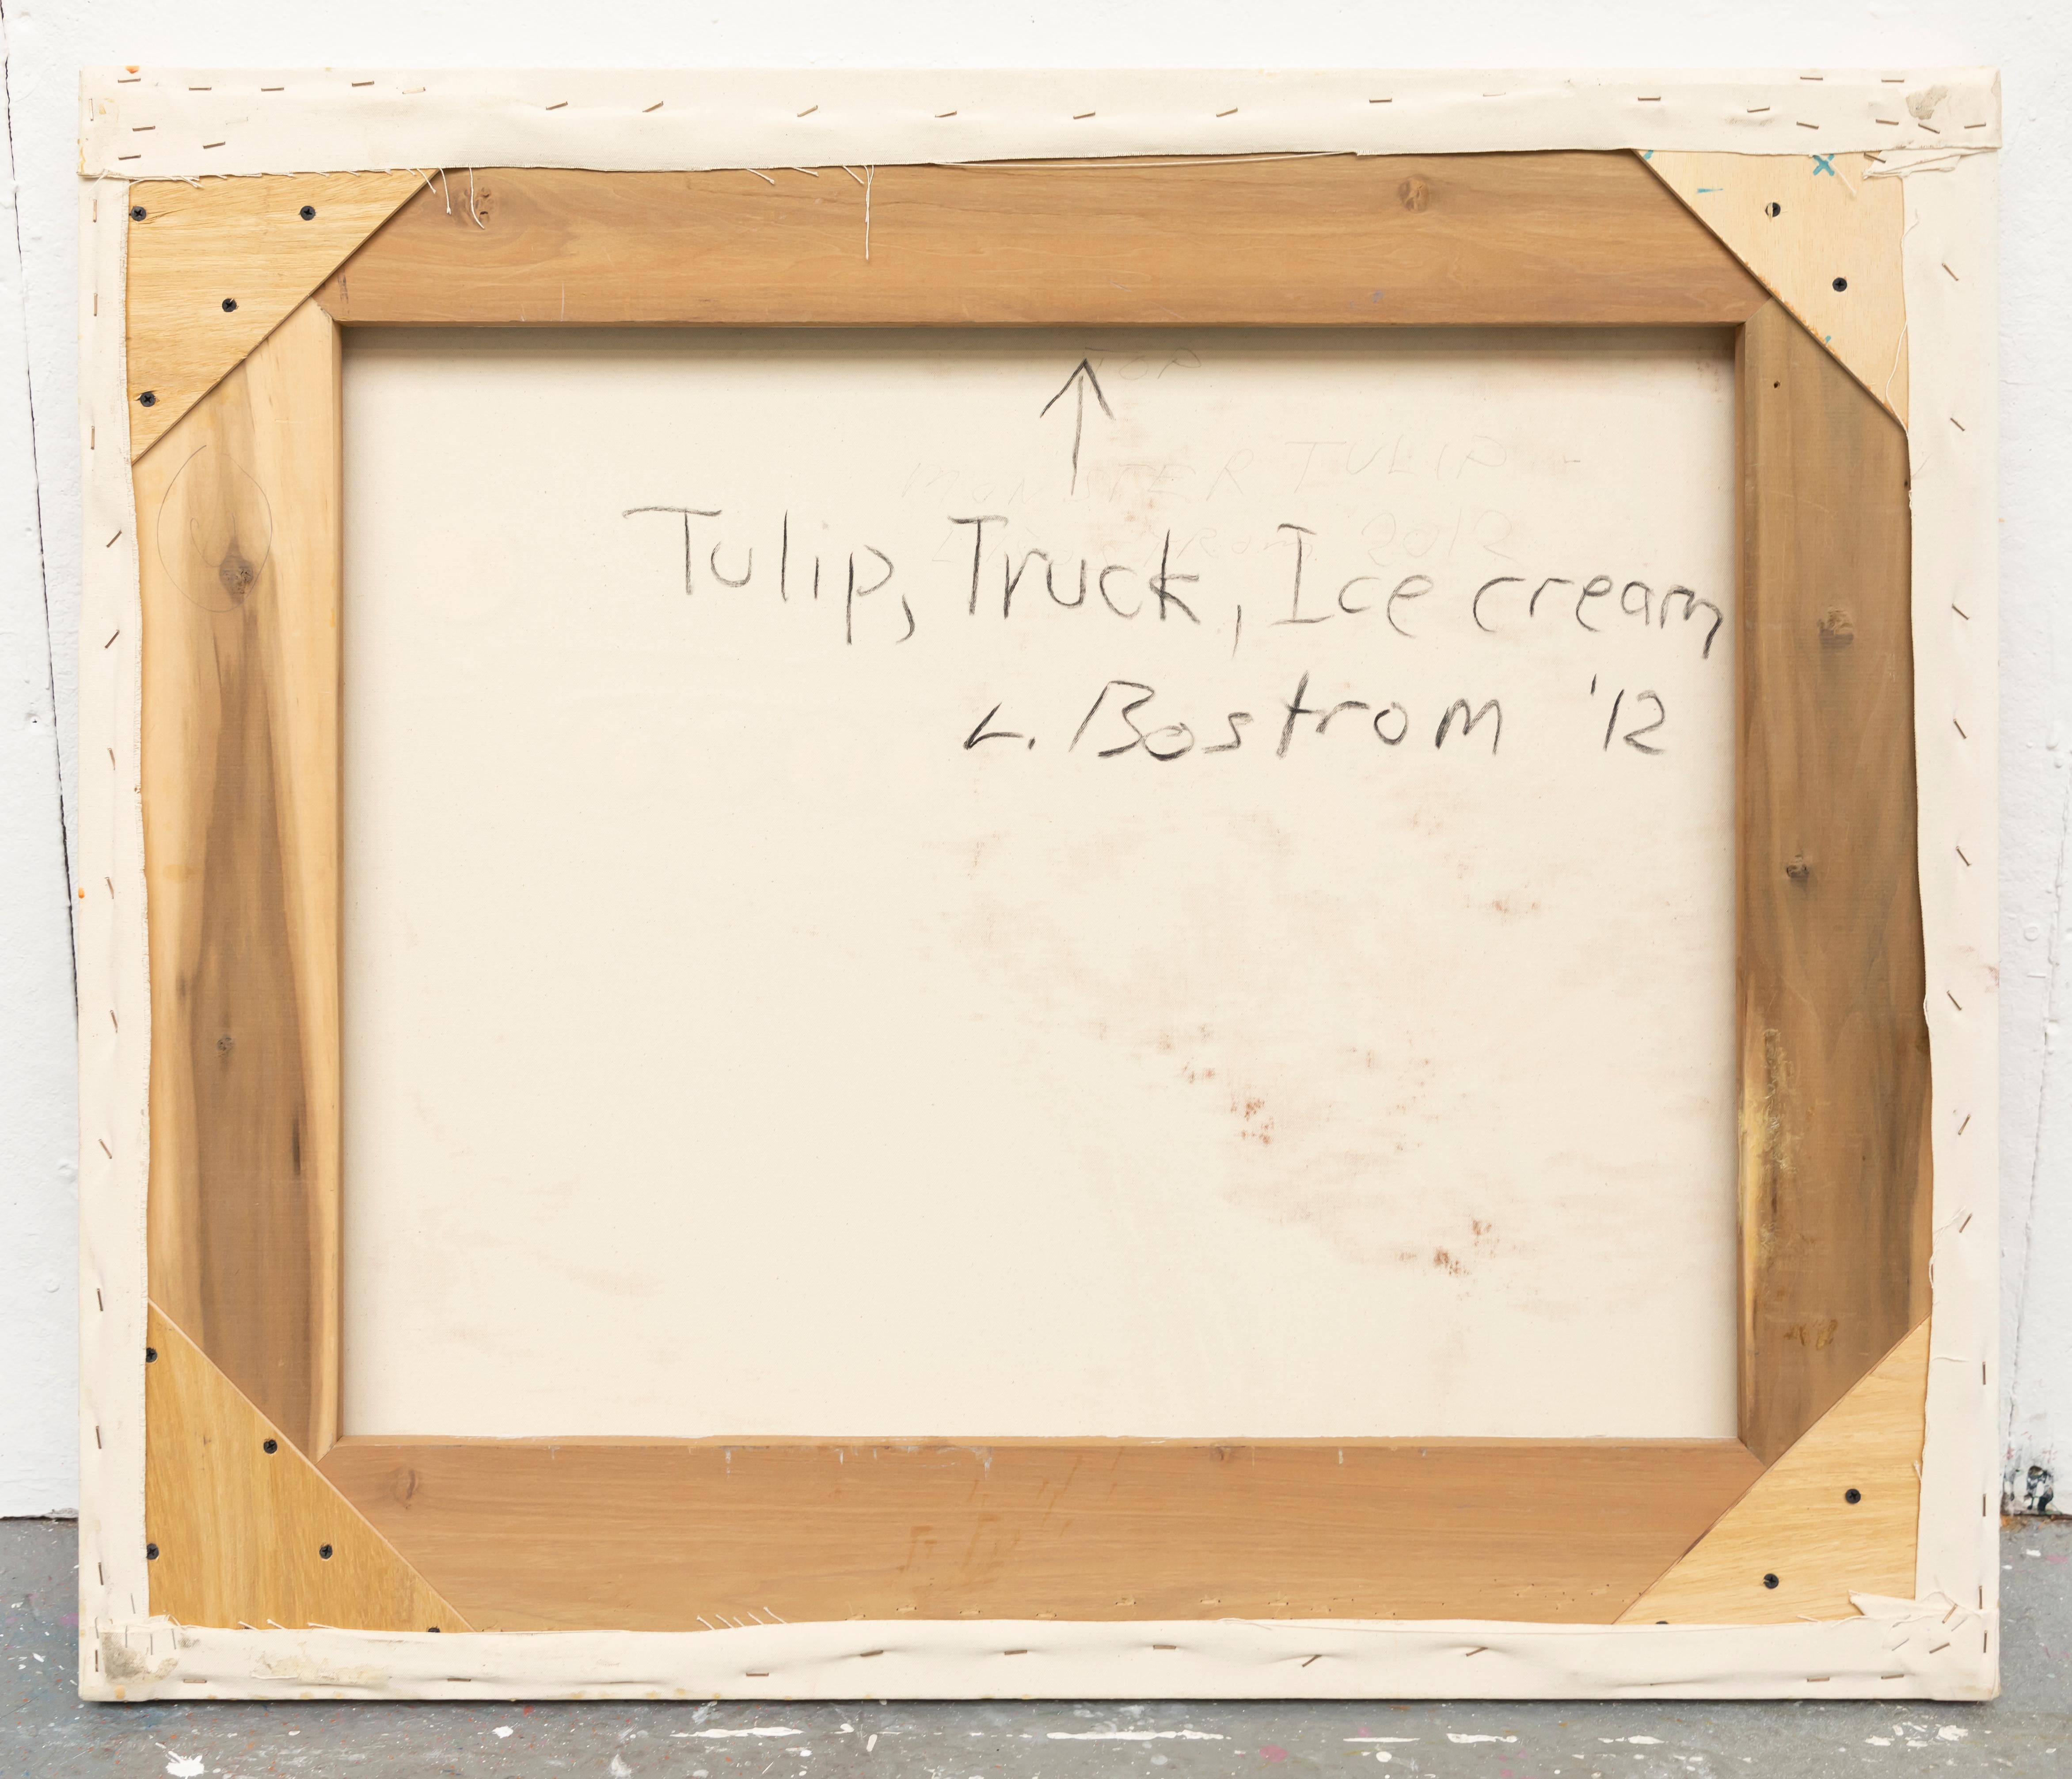 Leslie Bostrom, Tulip, Truck, Ice Cream, Oil on Canvas, 2012 For Sale 4